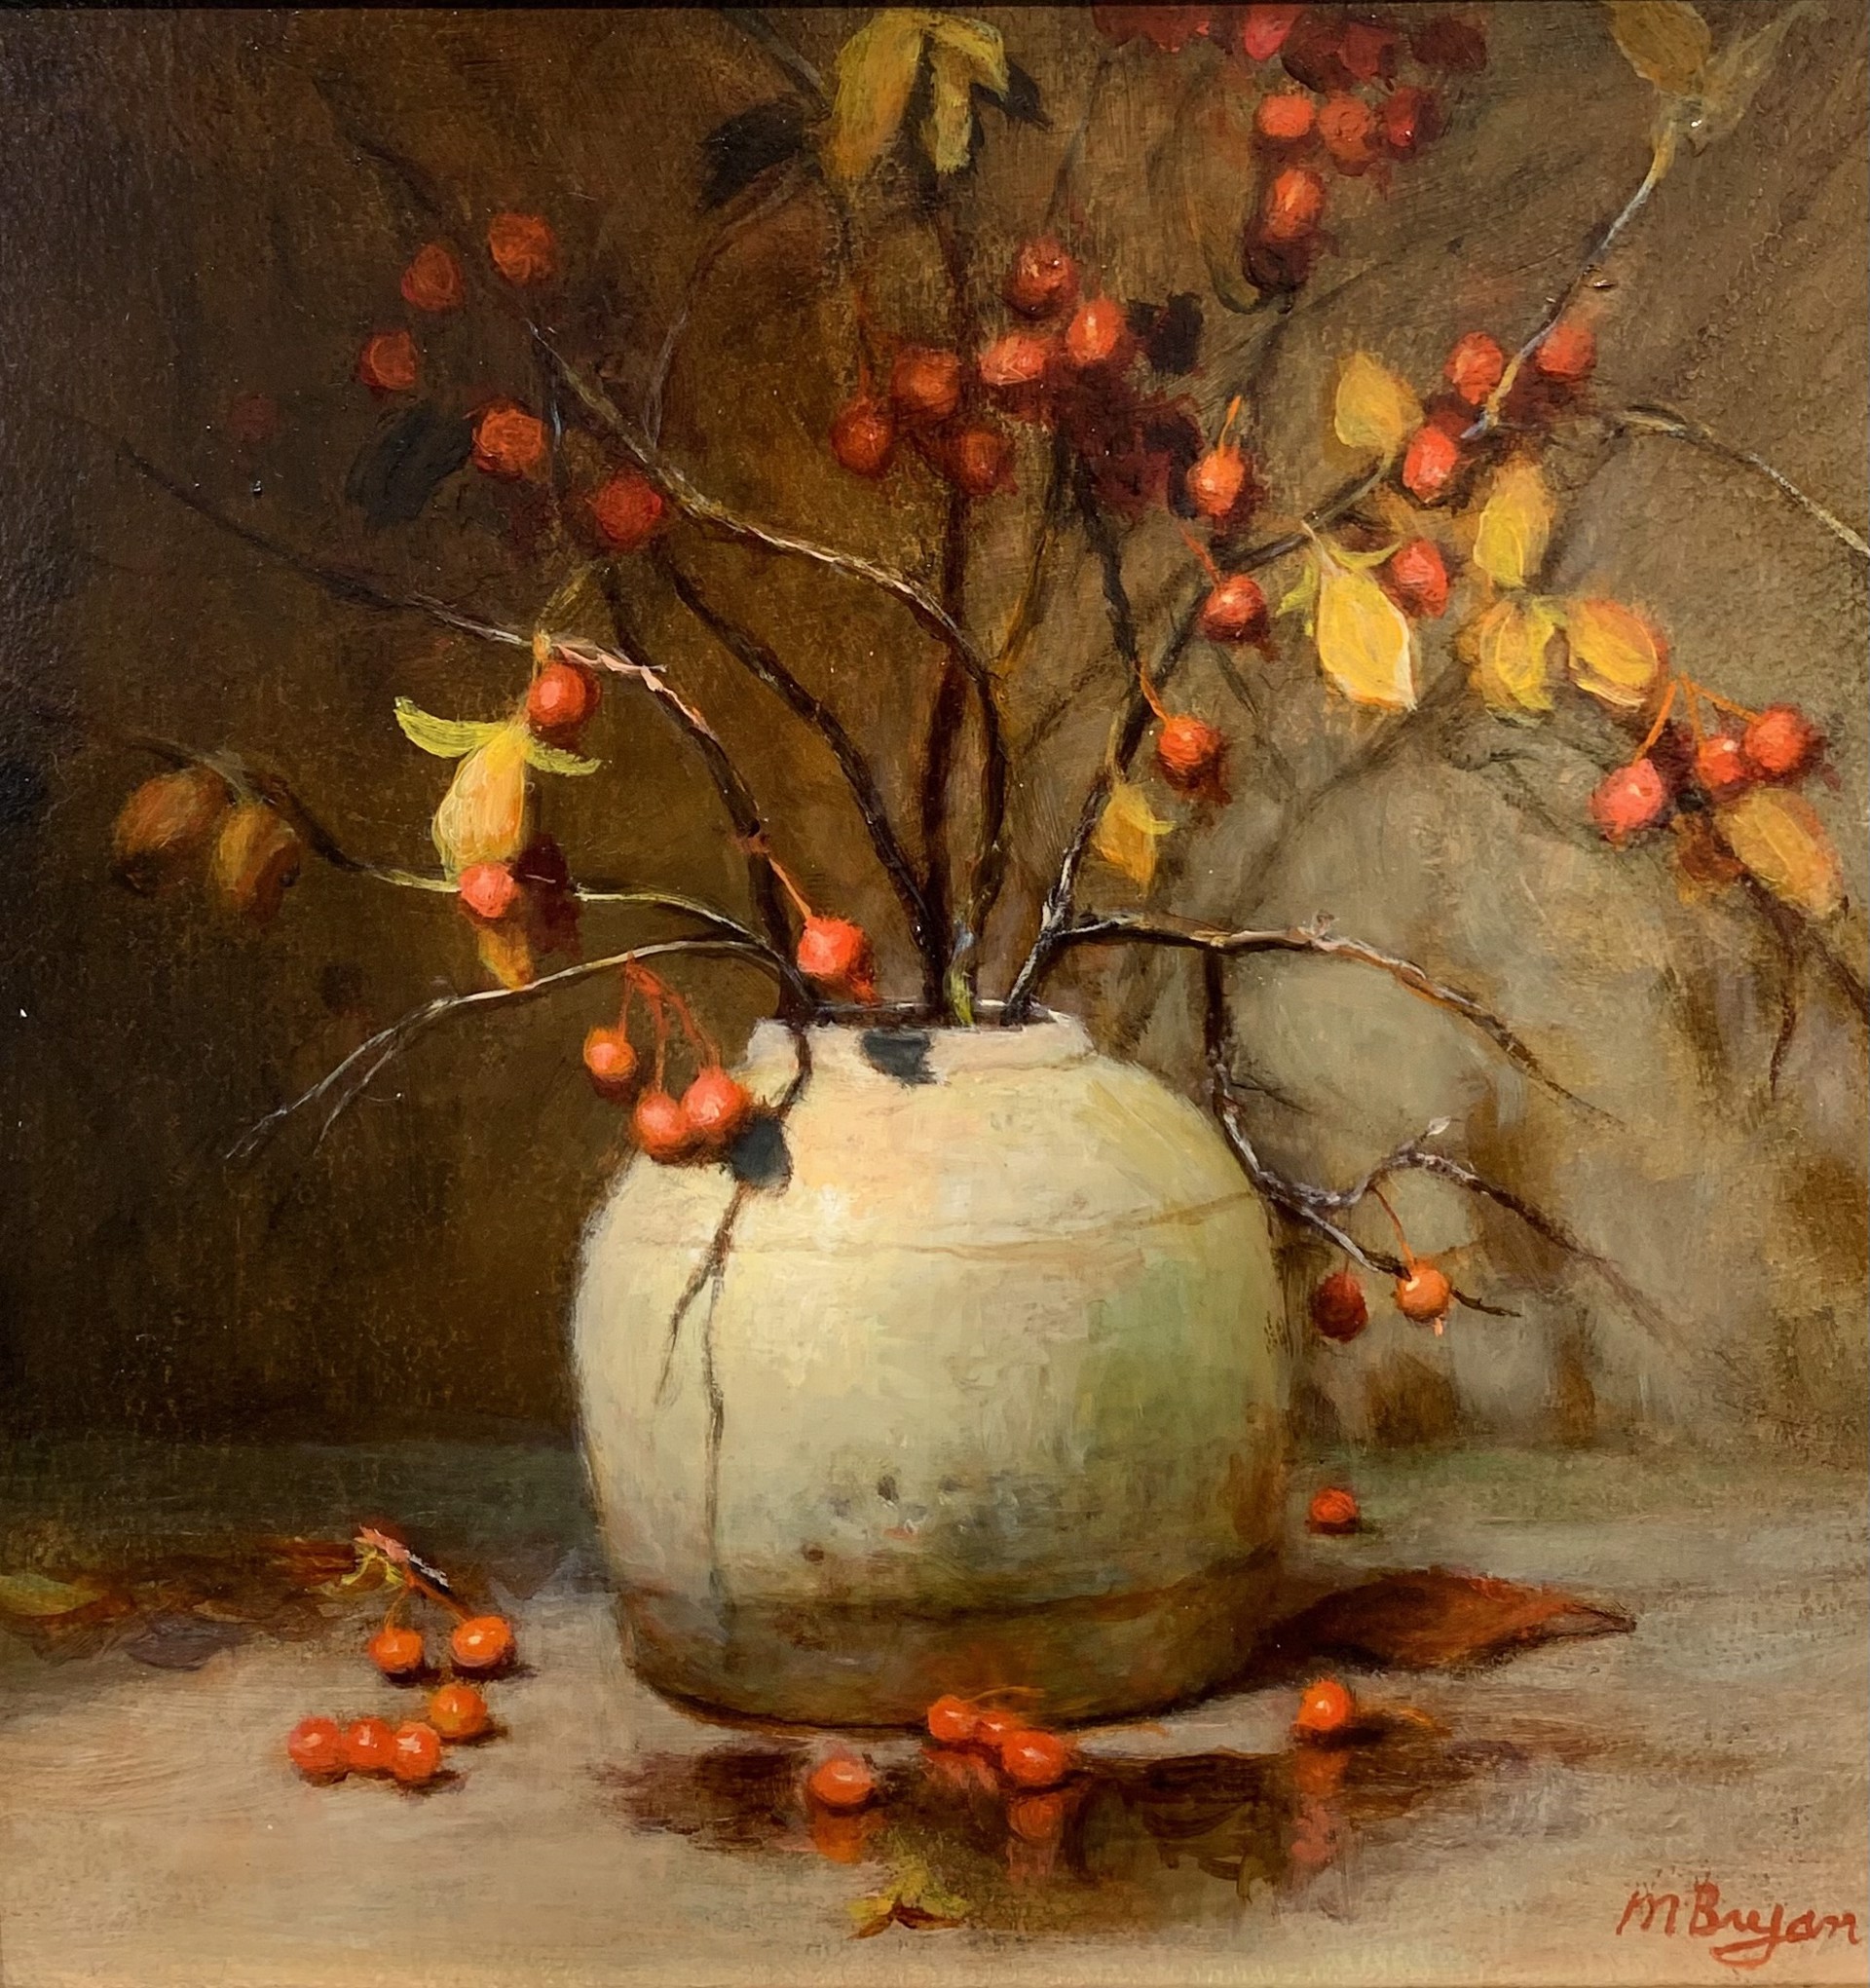 Tart Autumn by Malcolm Bryan